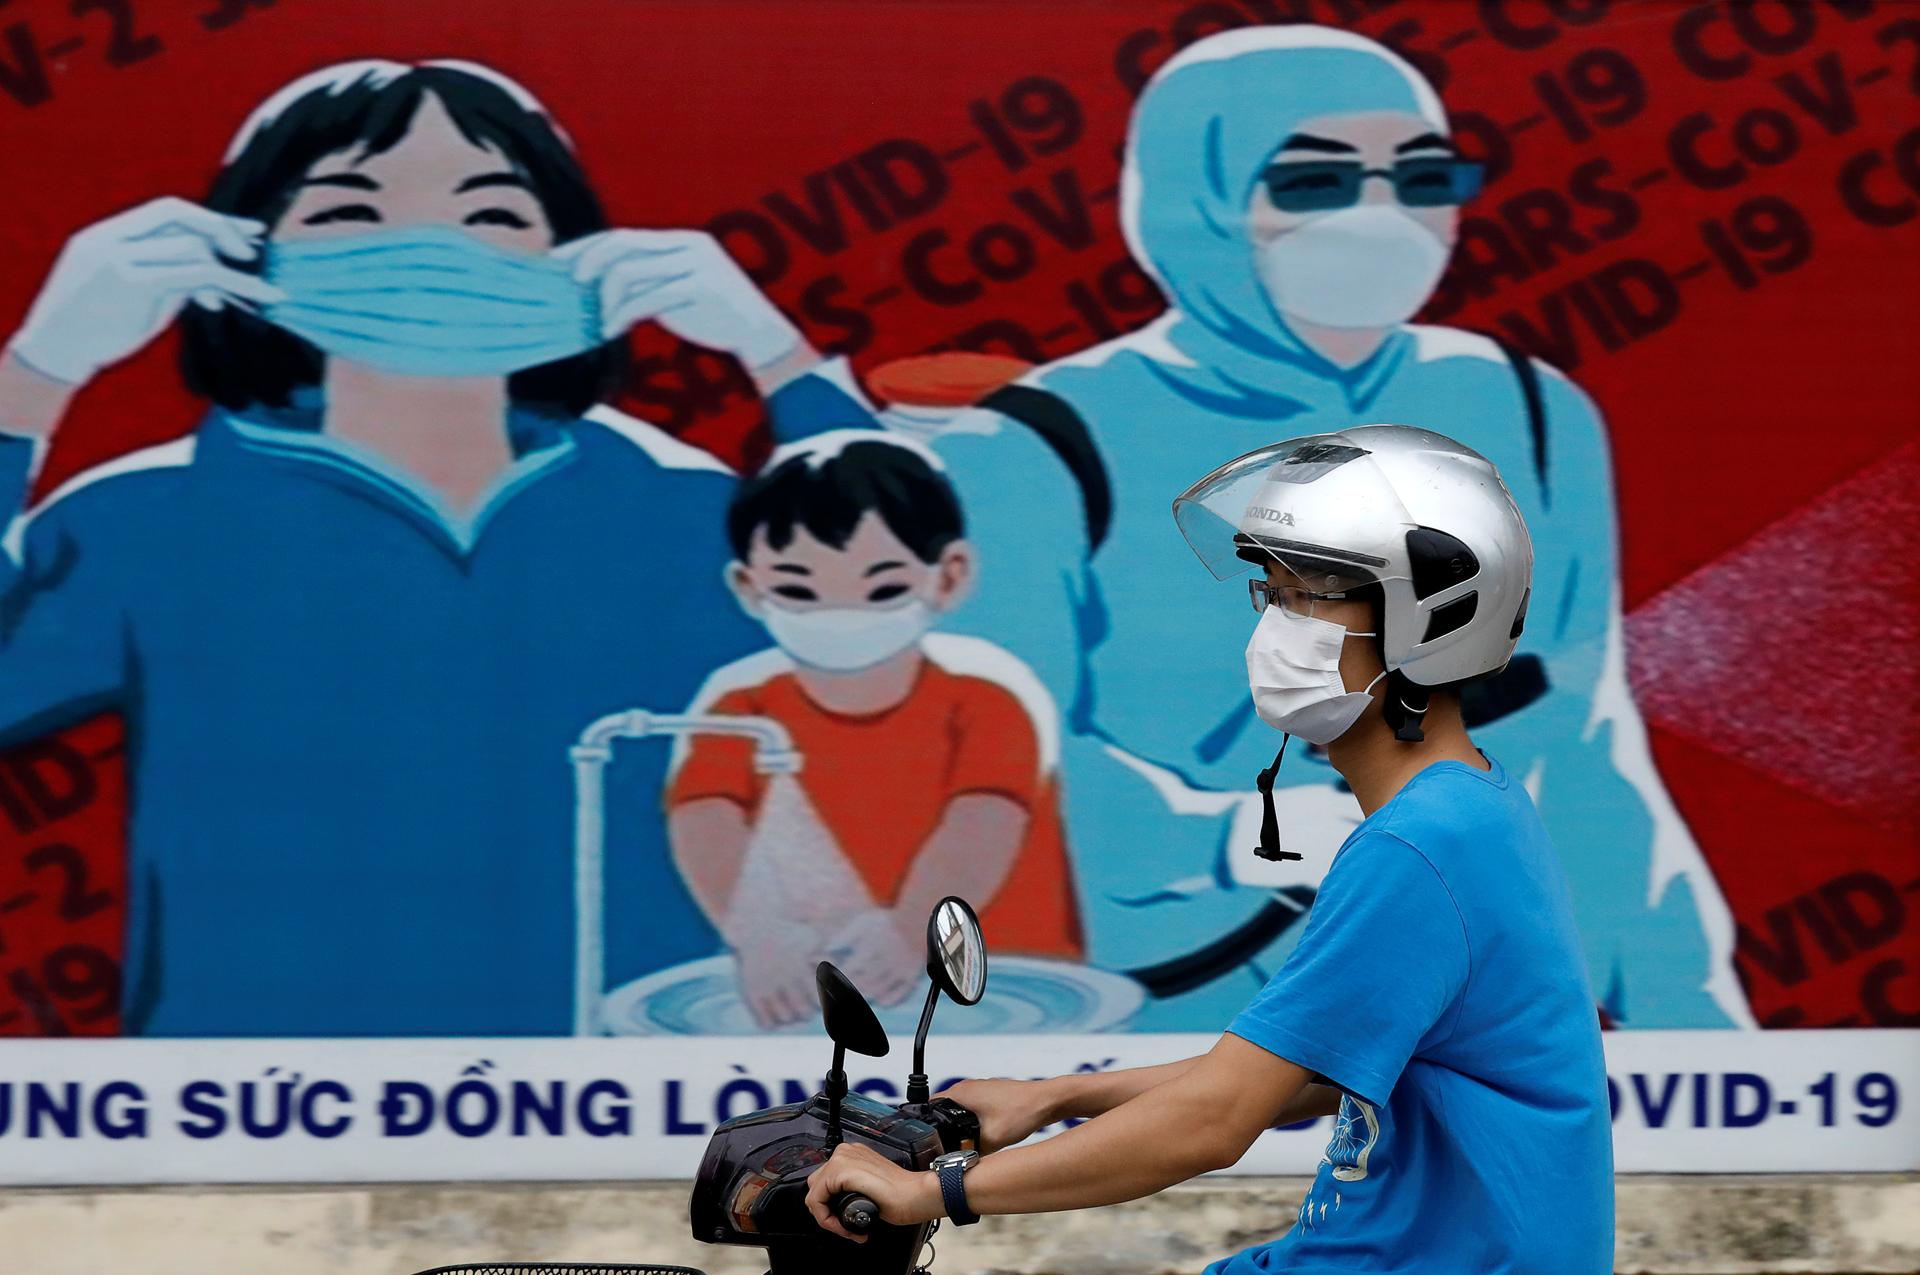 Vietnam reports 1 new local coronavirus case, tally at 621